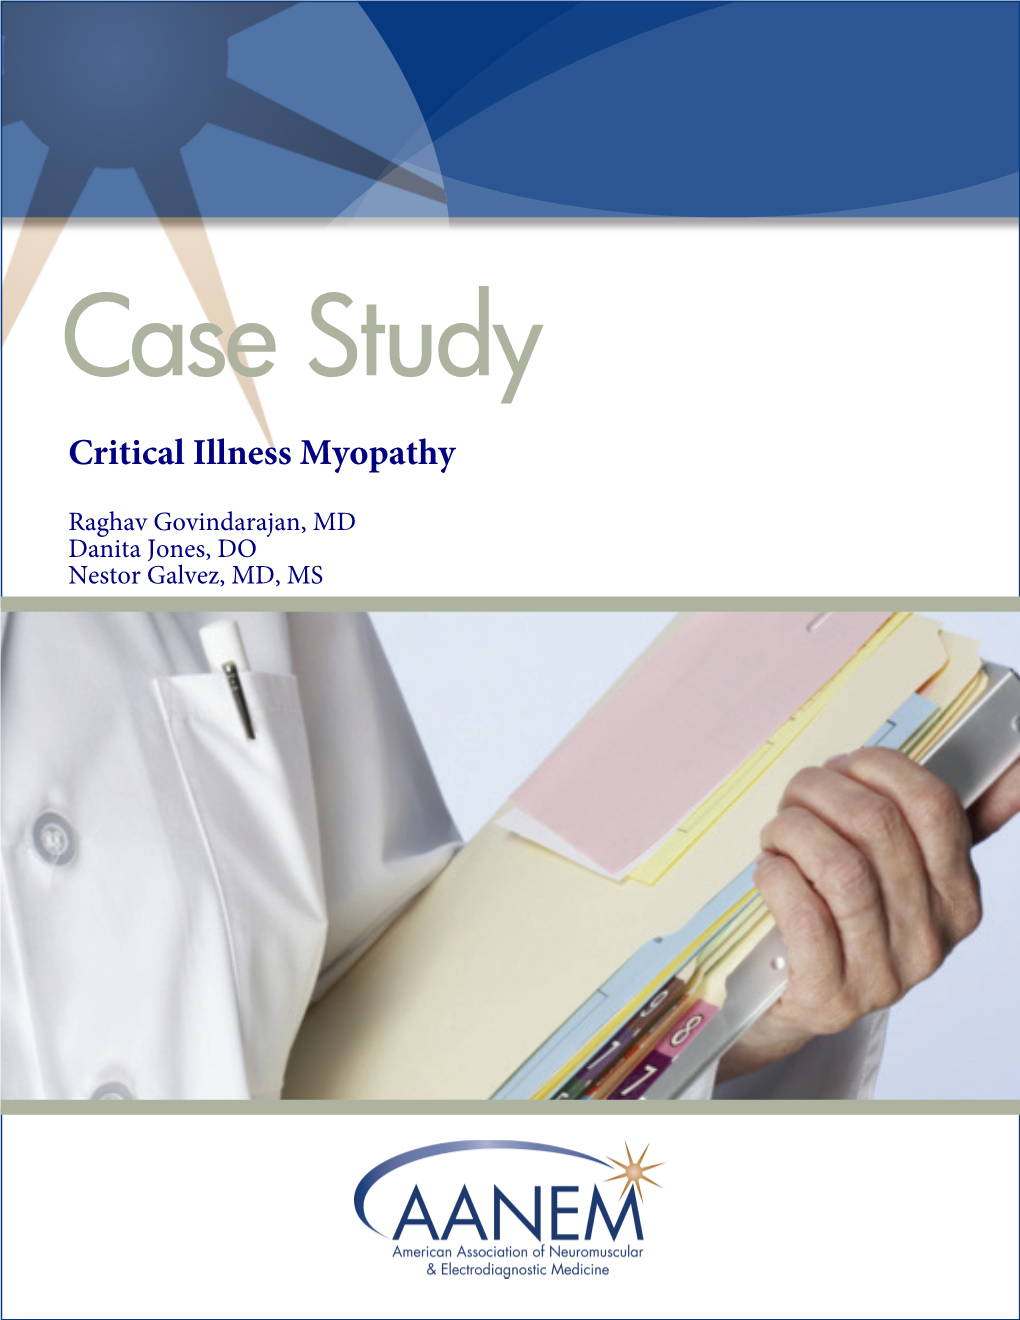 Case Study: Critical Illness Myopathy